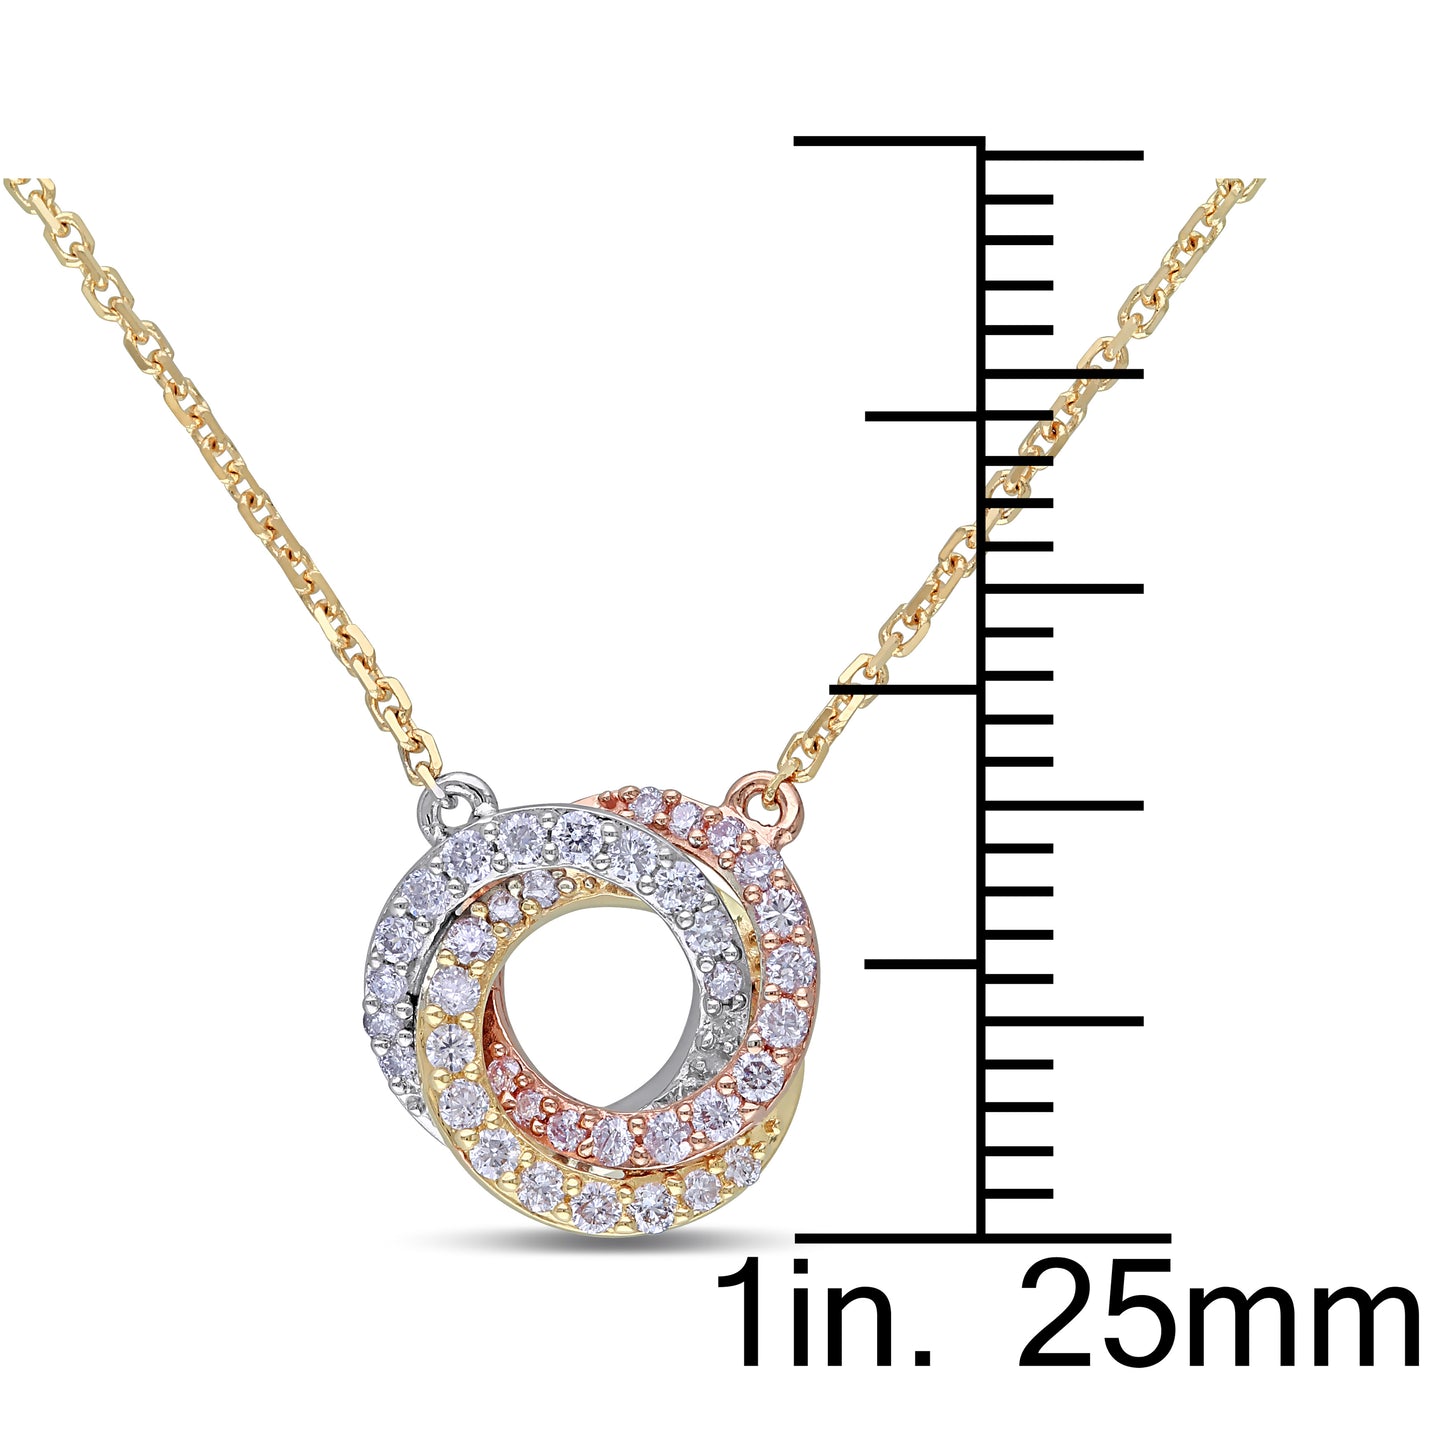 Interlocking Diamond Necklace in 14k Gold